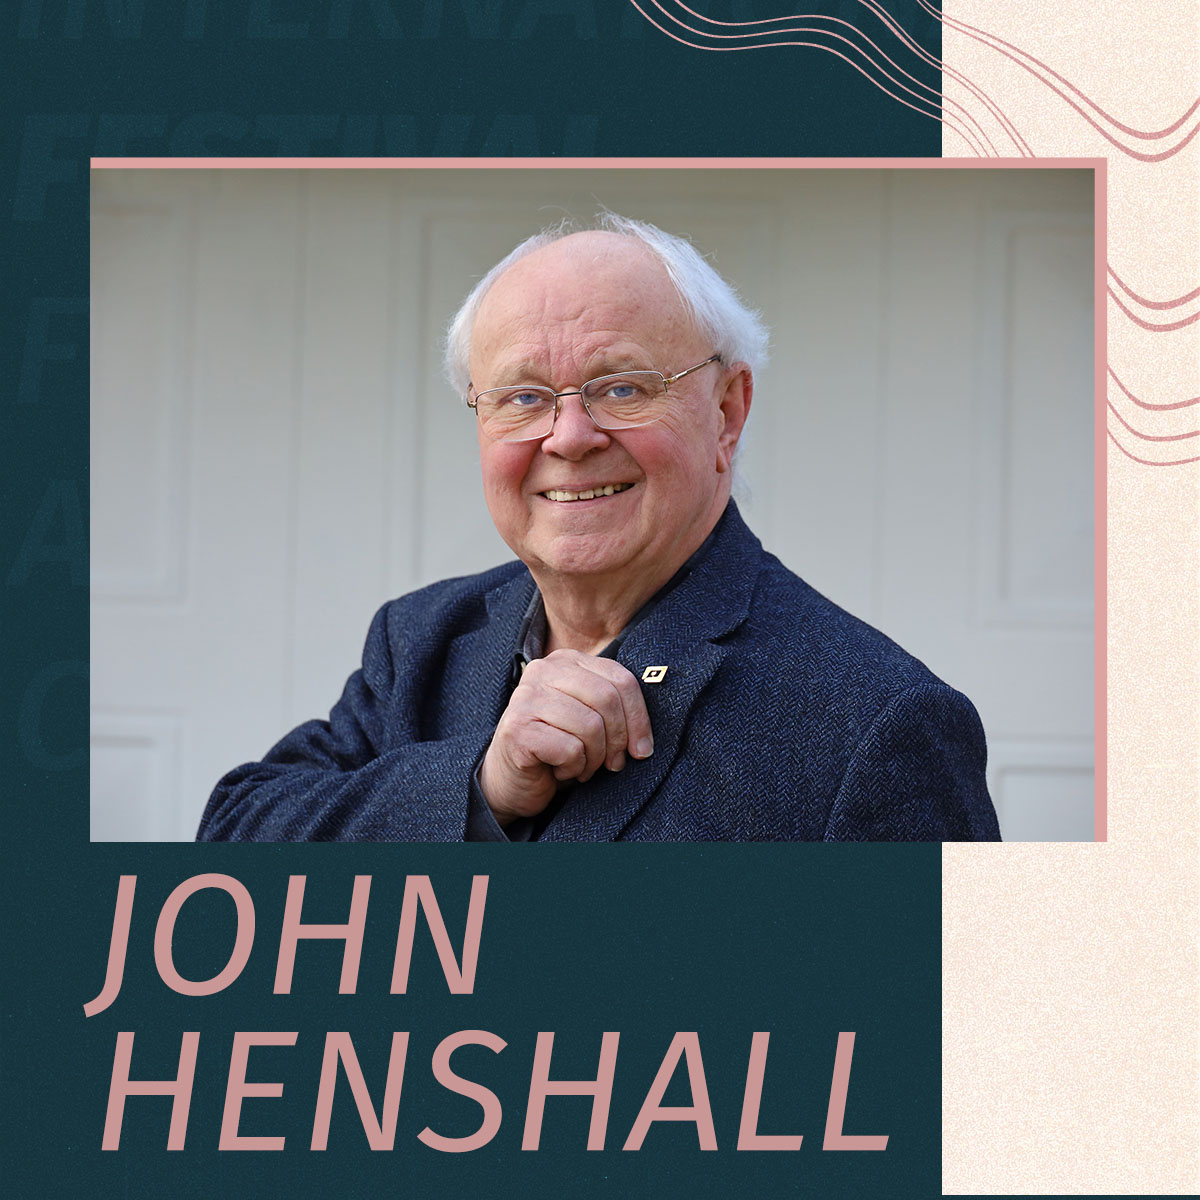 John Henshall